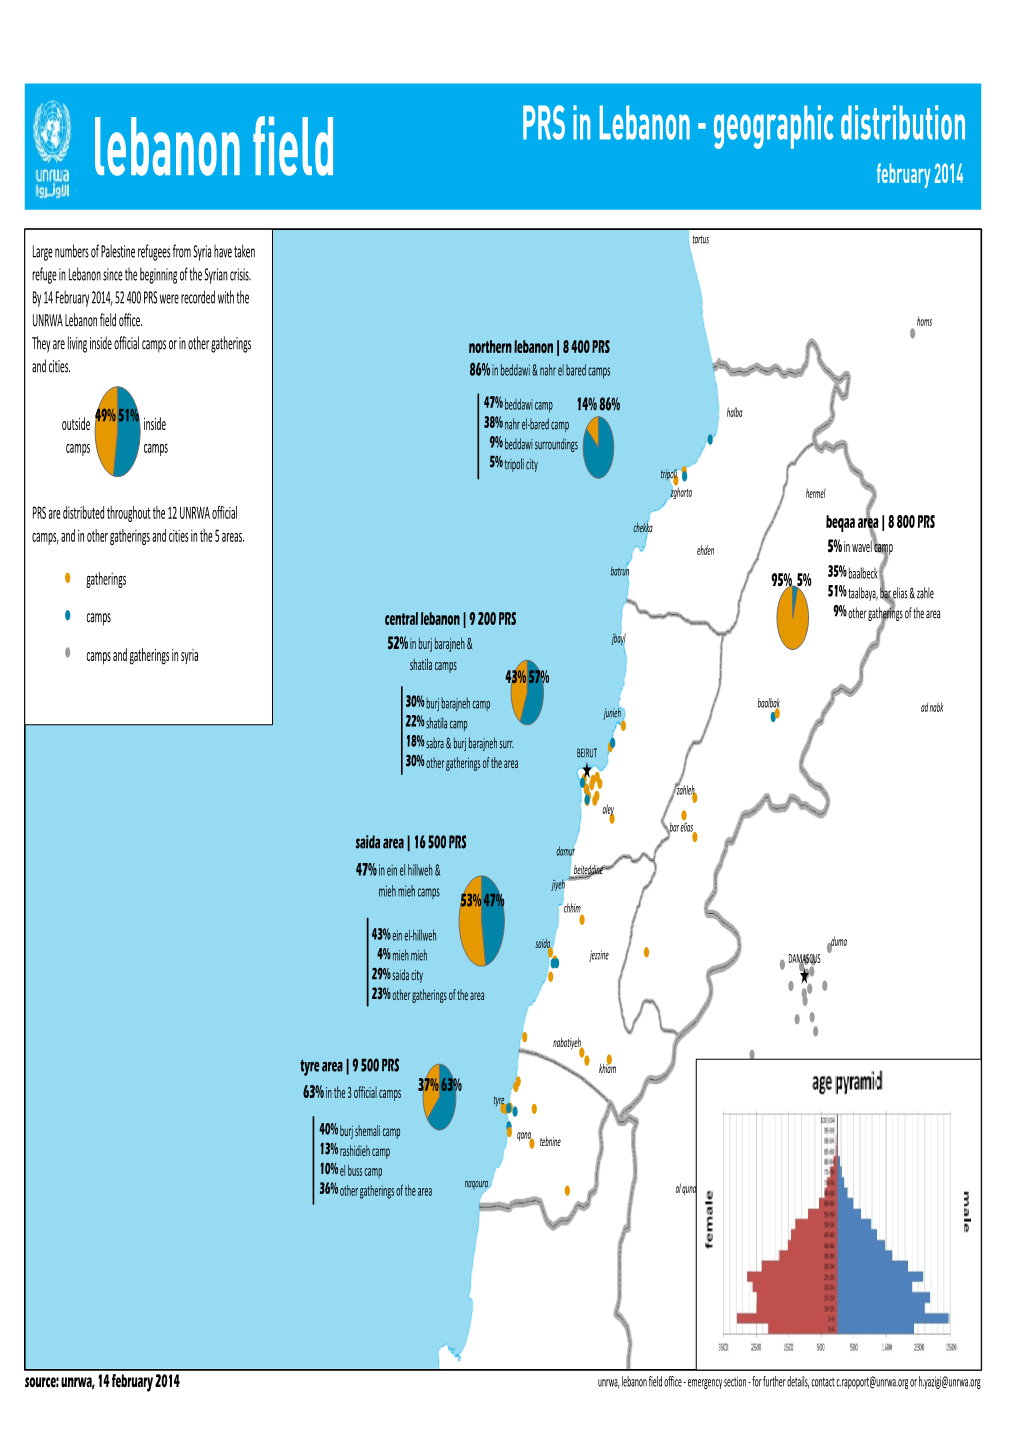 PRS in Lebanon - Geographic Distribution Lebanon Field February 2014